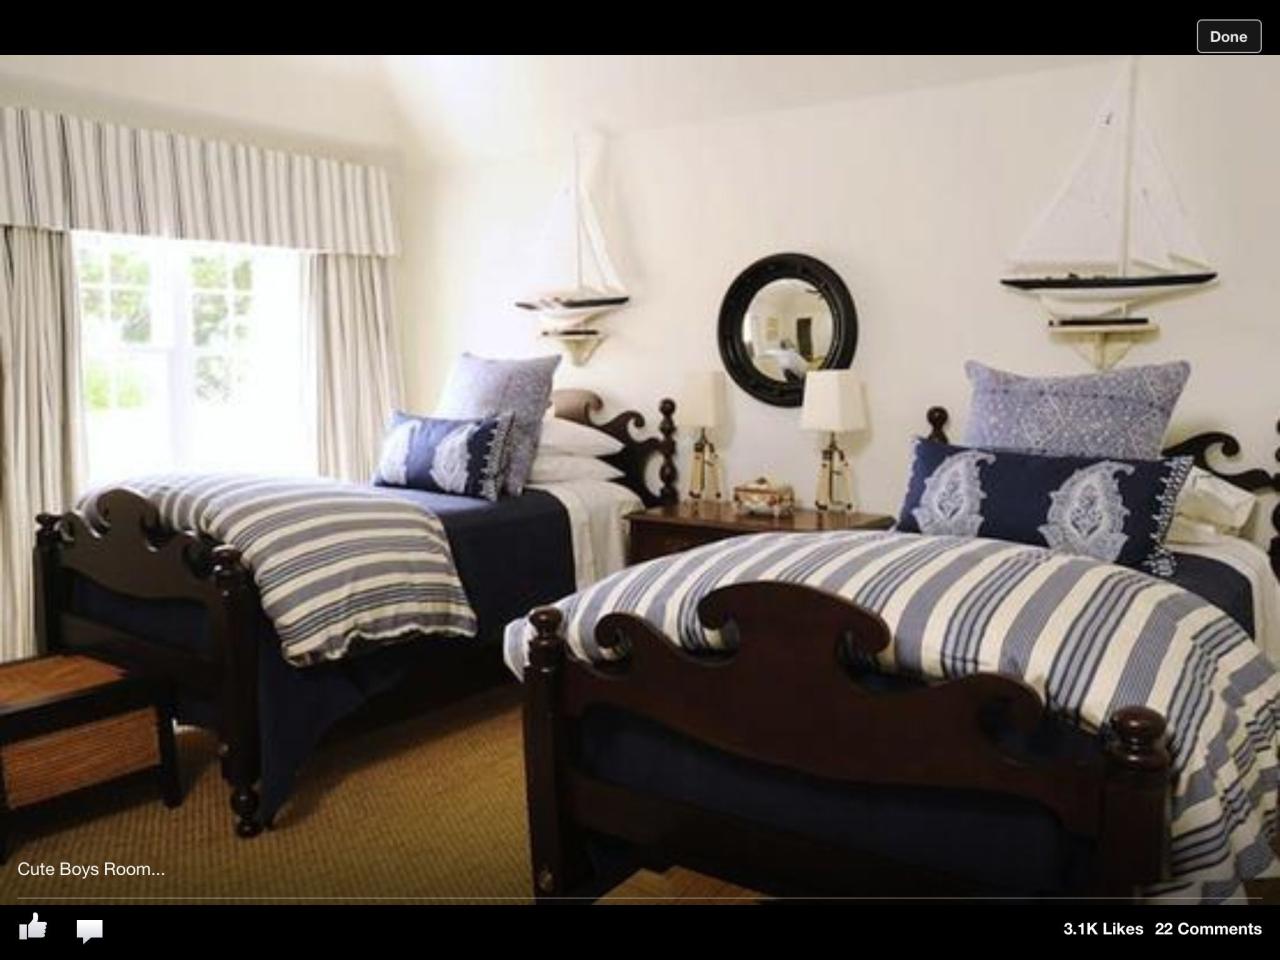 Nautical Theme Bedroom Decor for a Coastal Feel